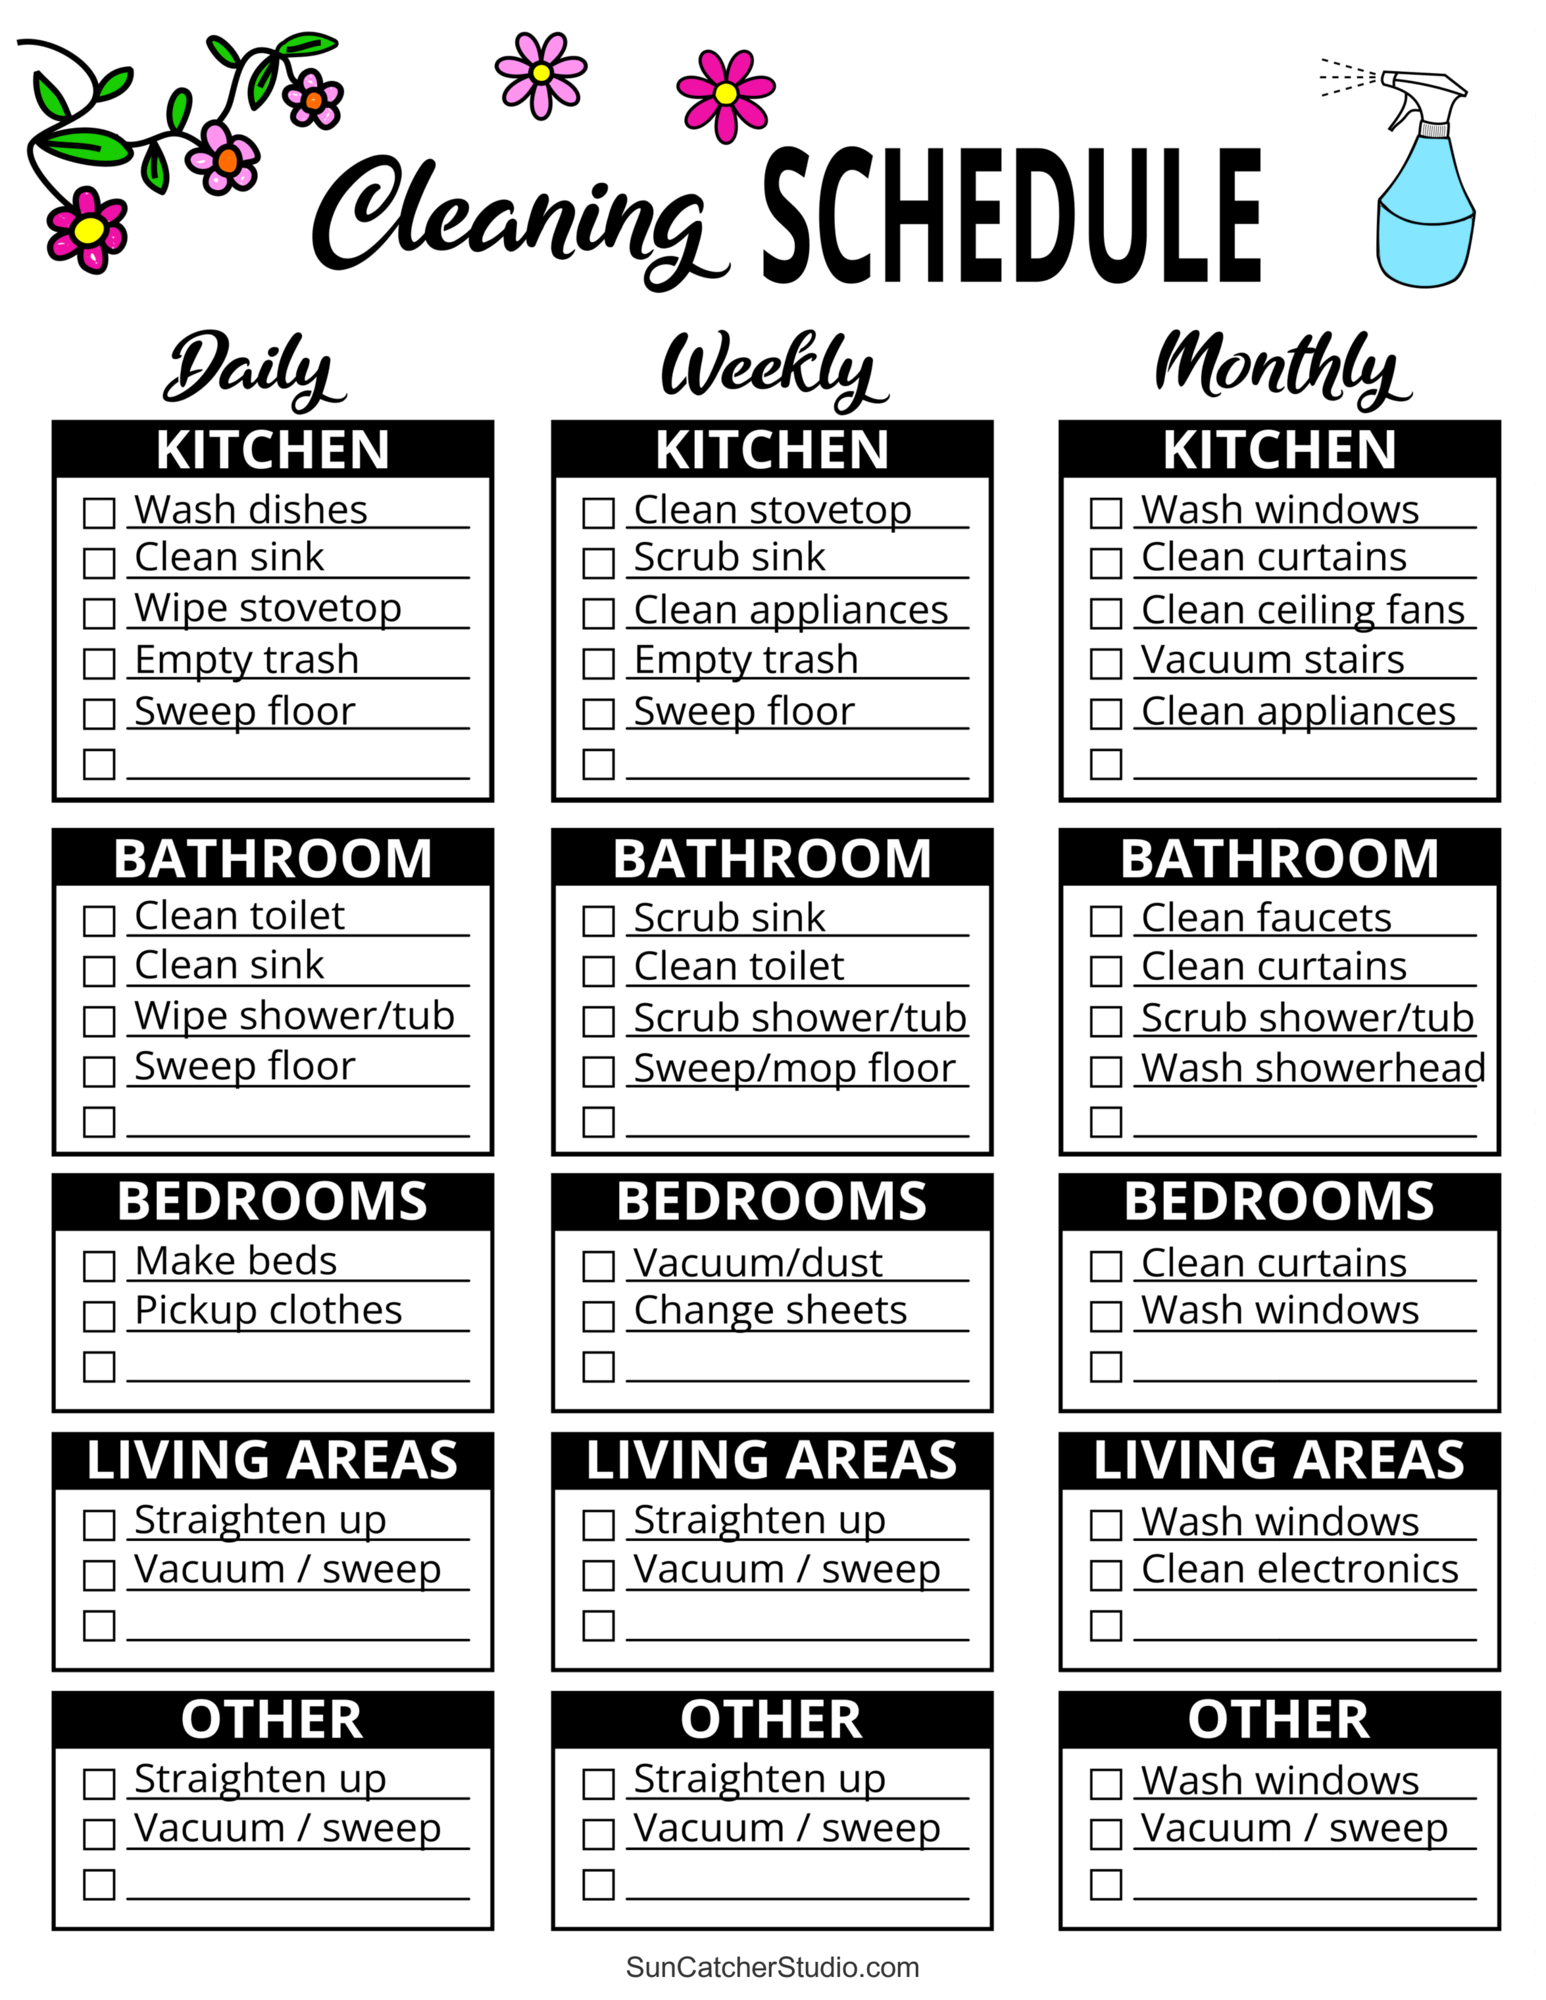 https://suncatcherstudio.com/uploads/printables/cleaning-checklist/pdf-png/cleaning-schedule-checklist-010101-fefefe.png